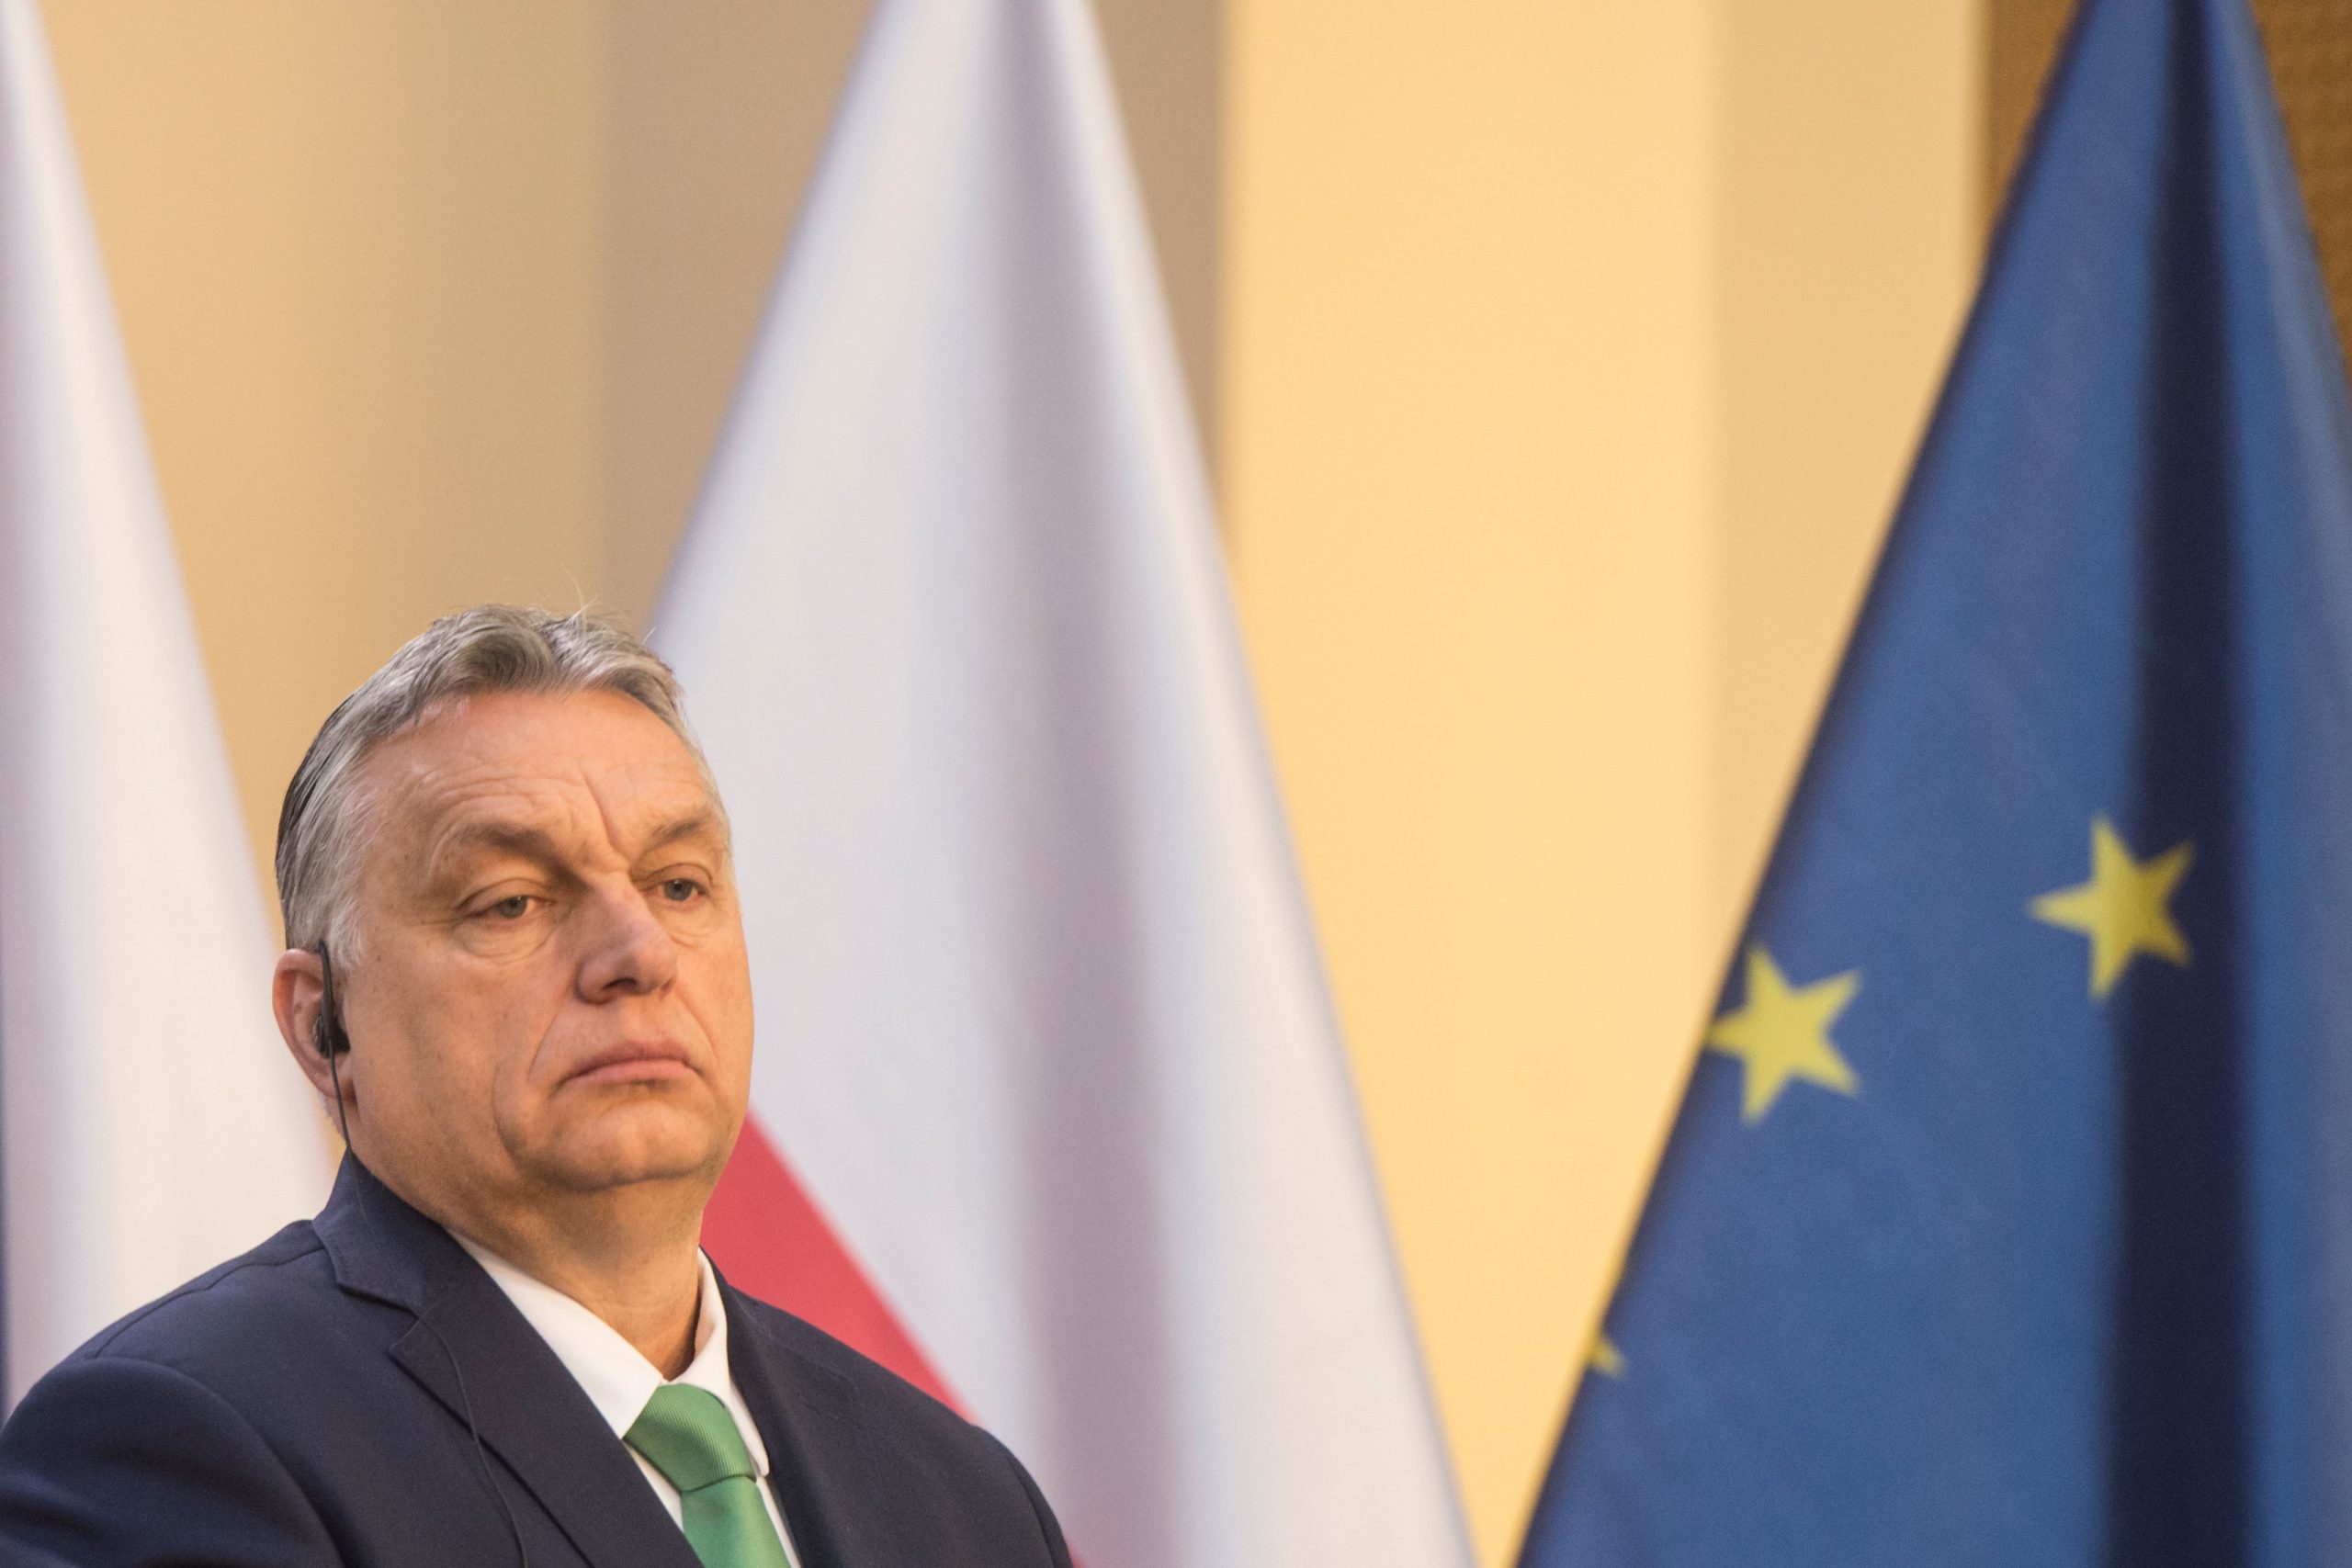 MEPs slam Viktor Orbán over abuse of Hungary's trans community